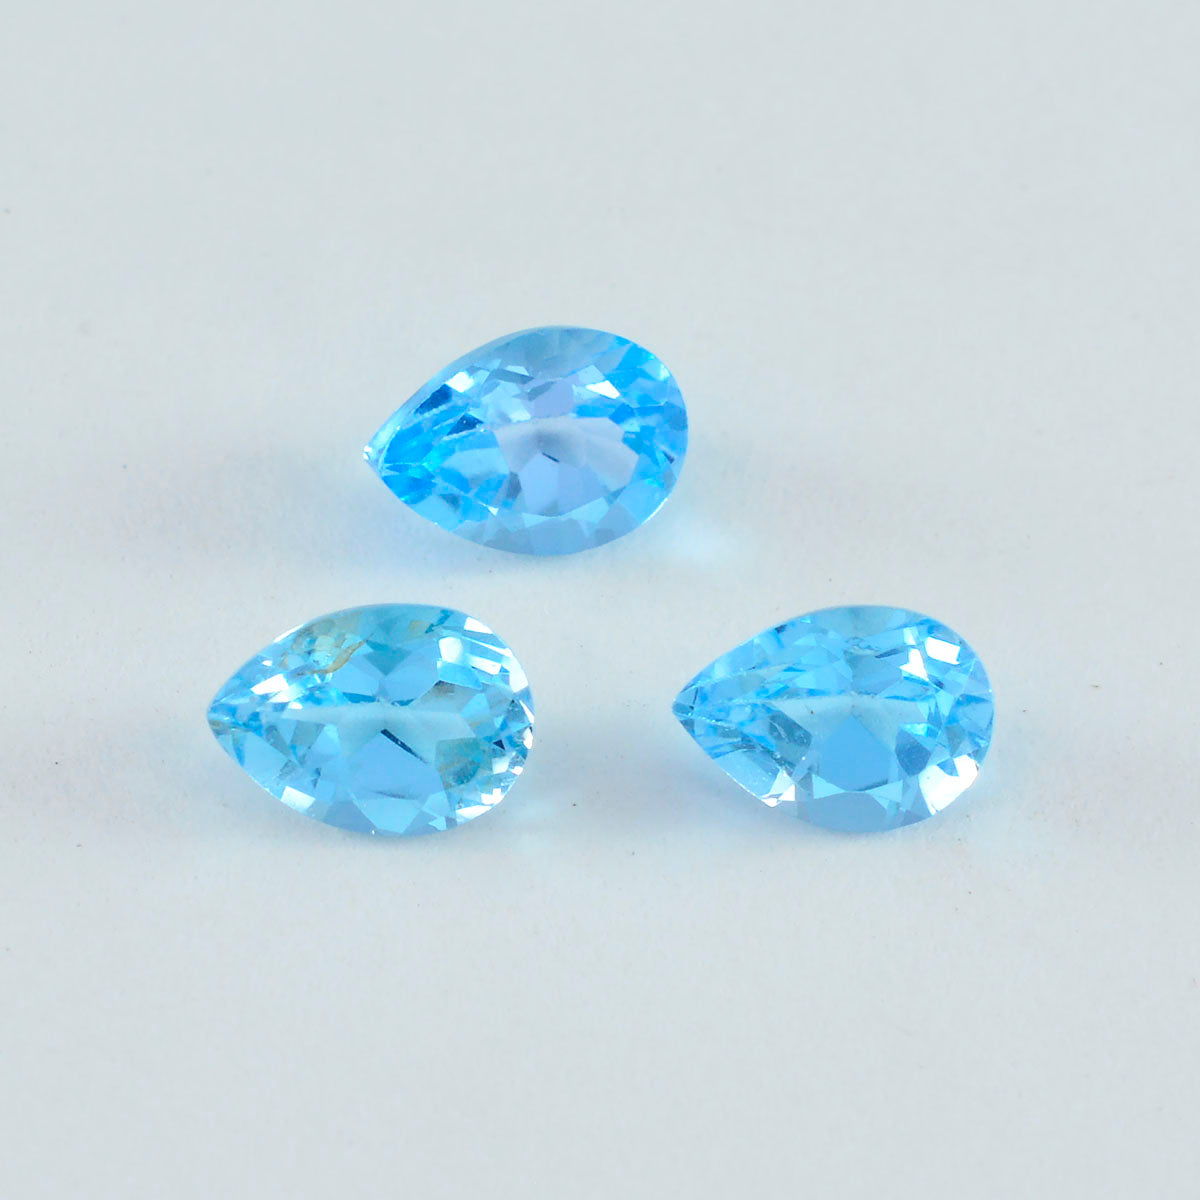 Riyogems 1PC Genuine Blue Topaz Faceted 7x10 mm Pear Shape astonishing Quality Loose Stone